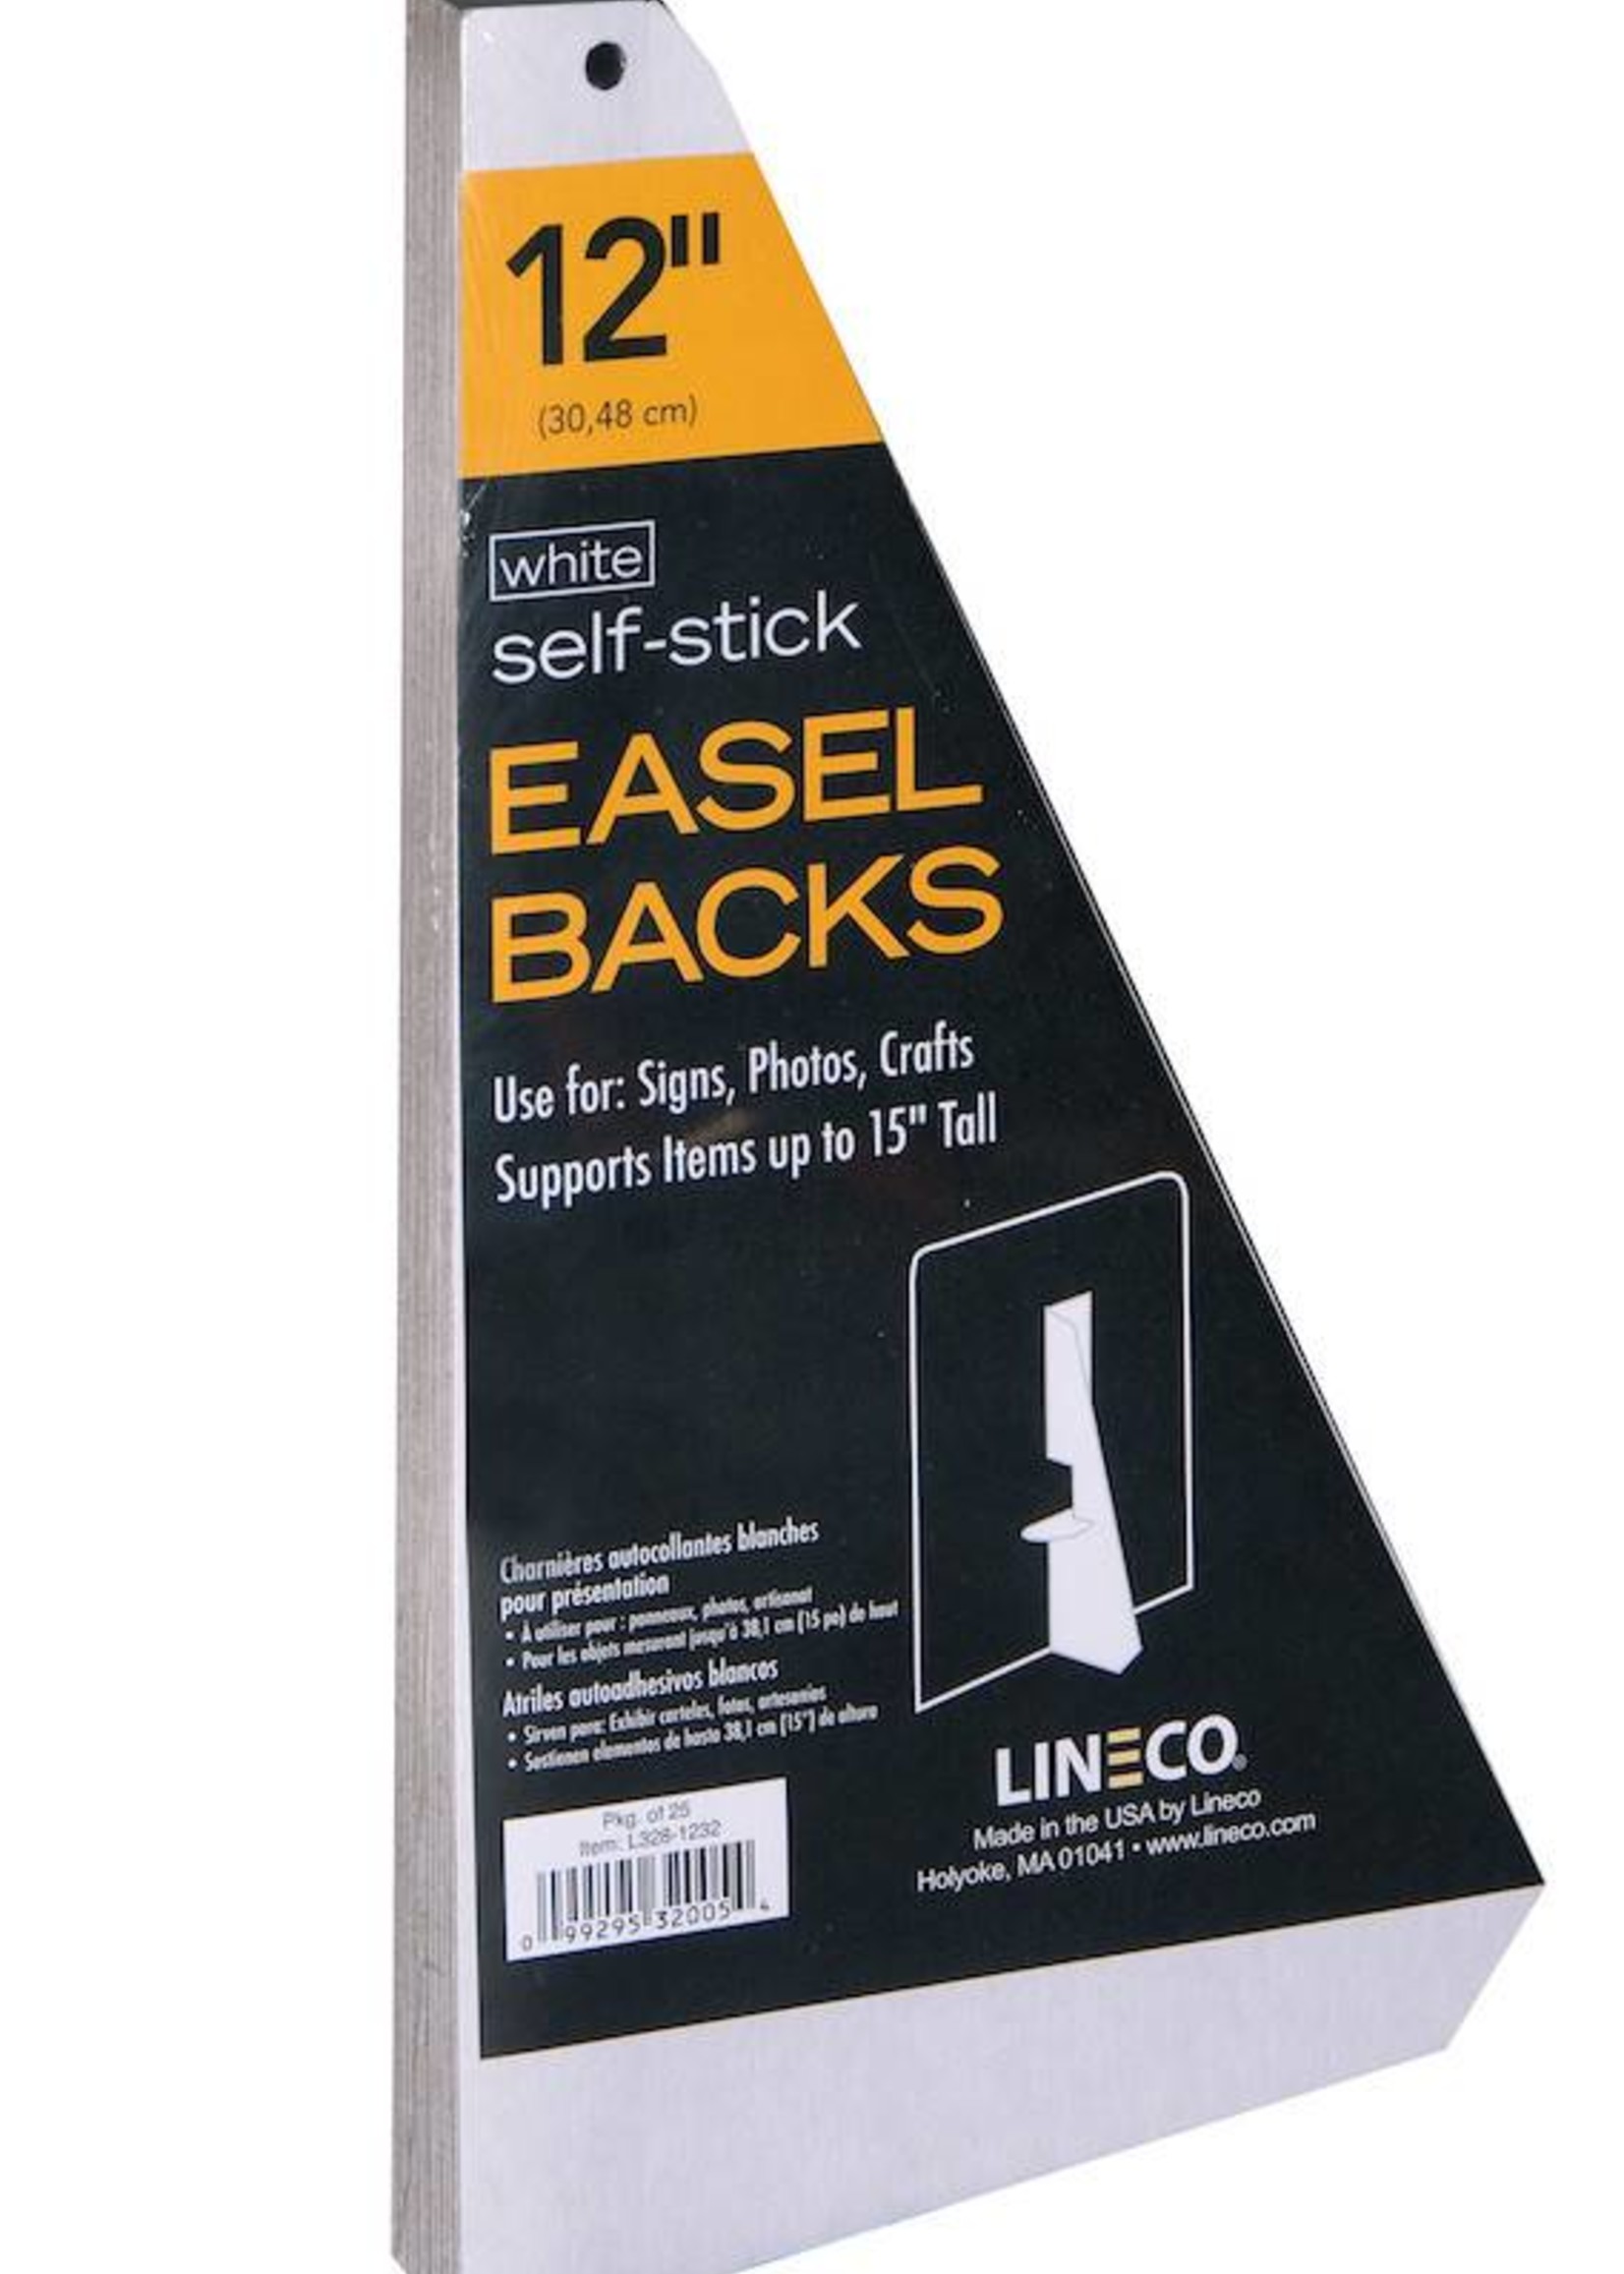 LINECO LINECO SELF-STICK EASEL BACKS WHITE 12 INCH 25/PK